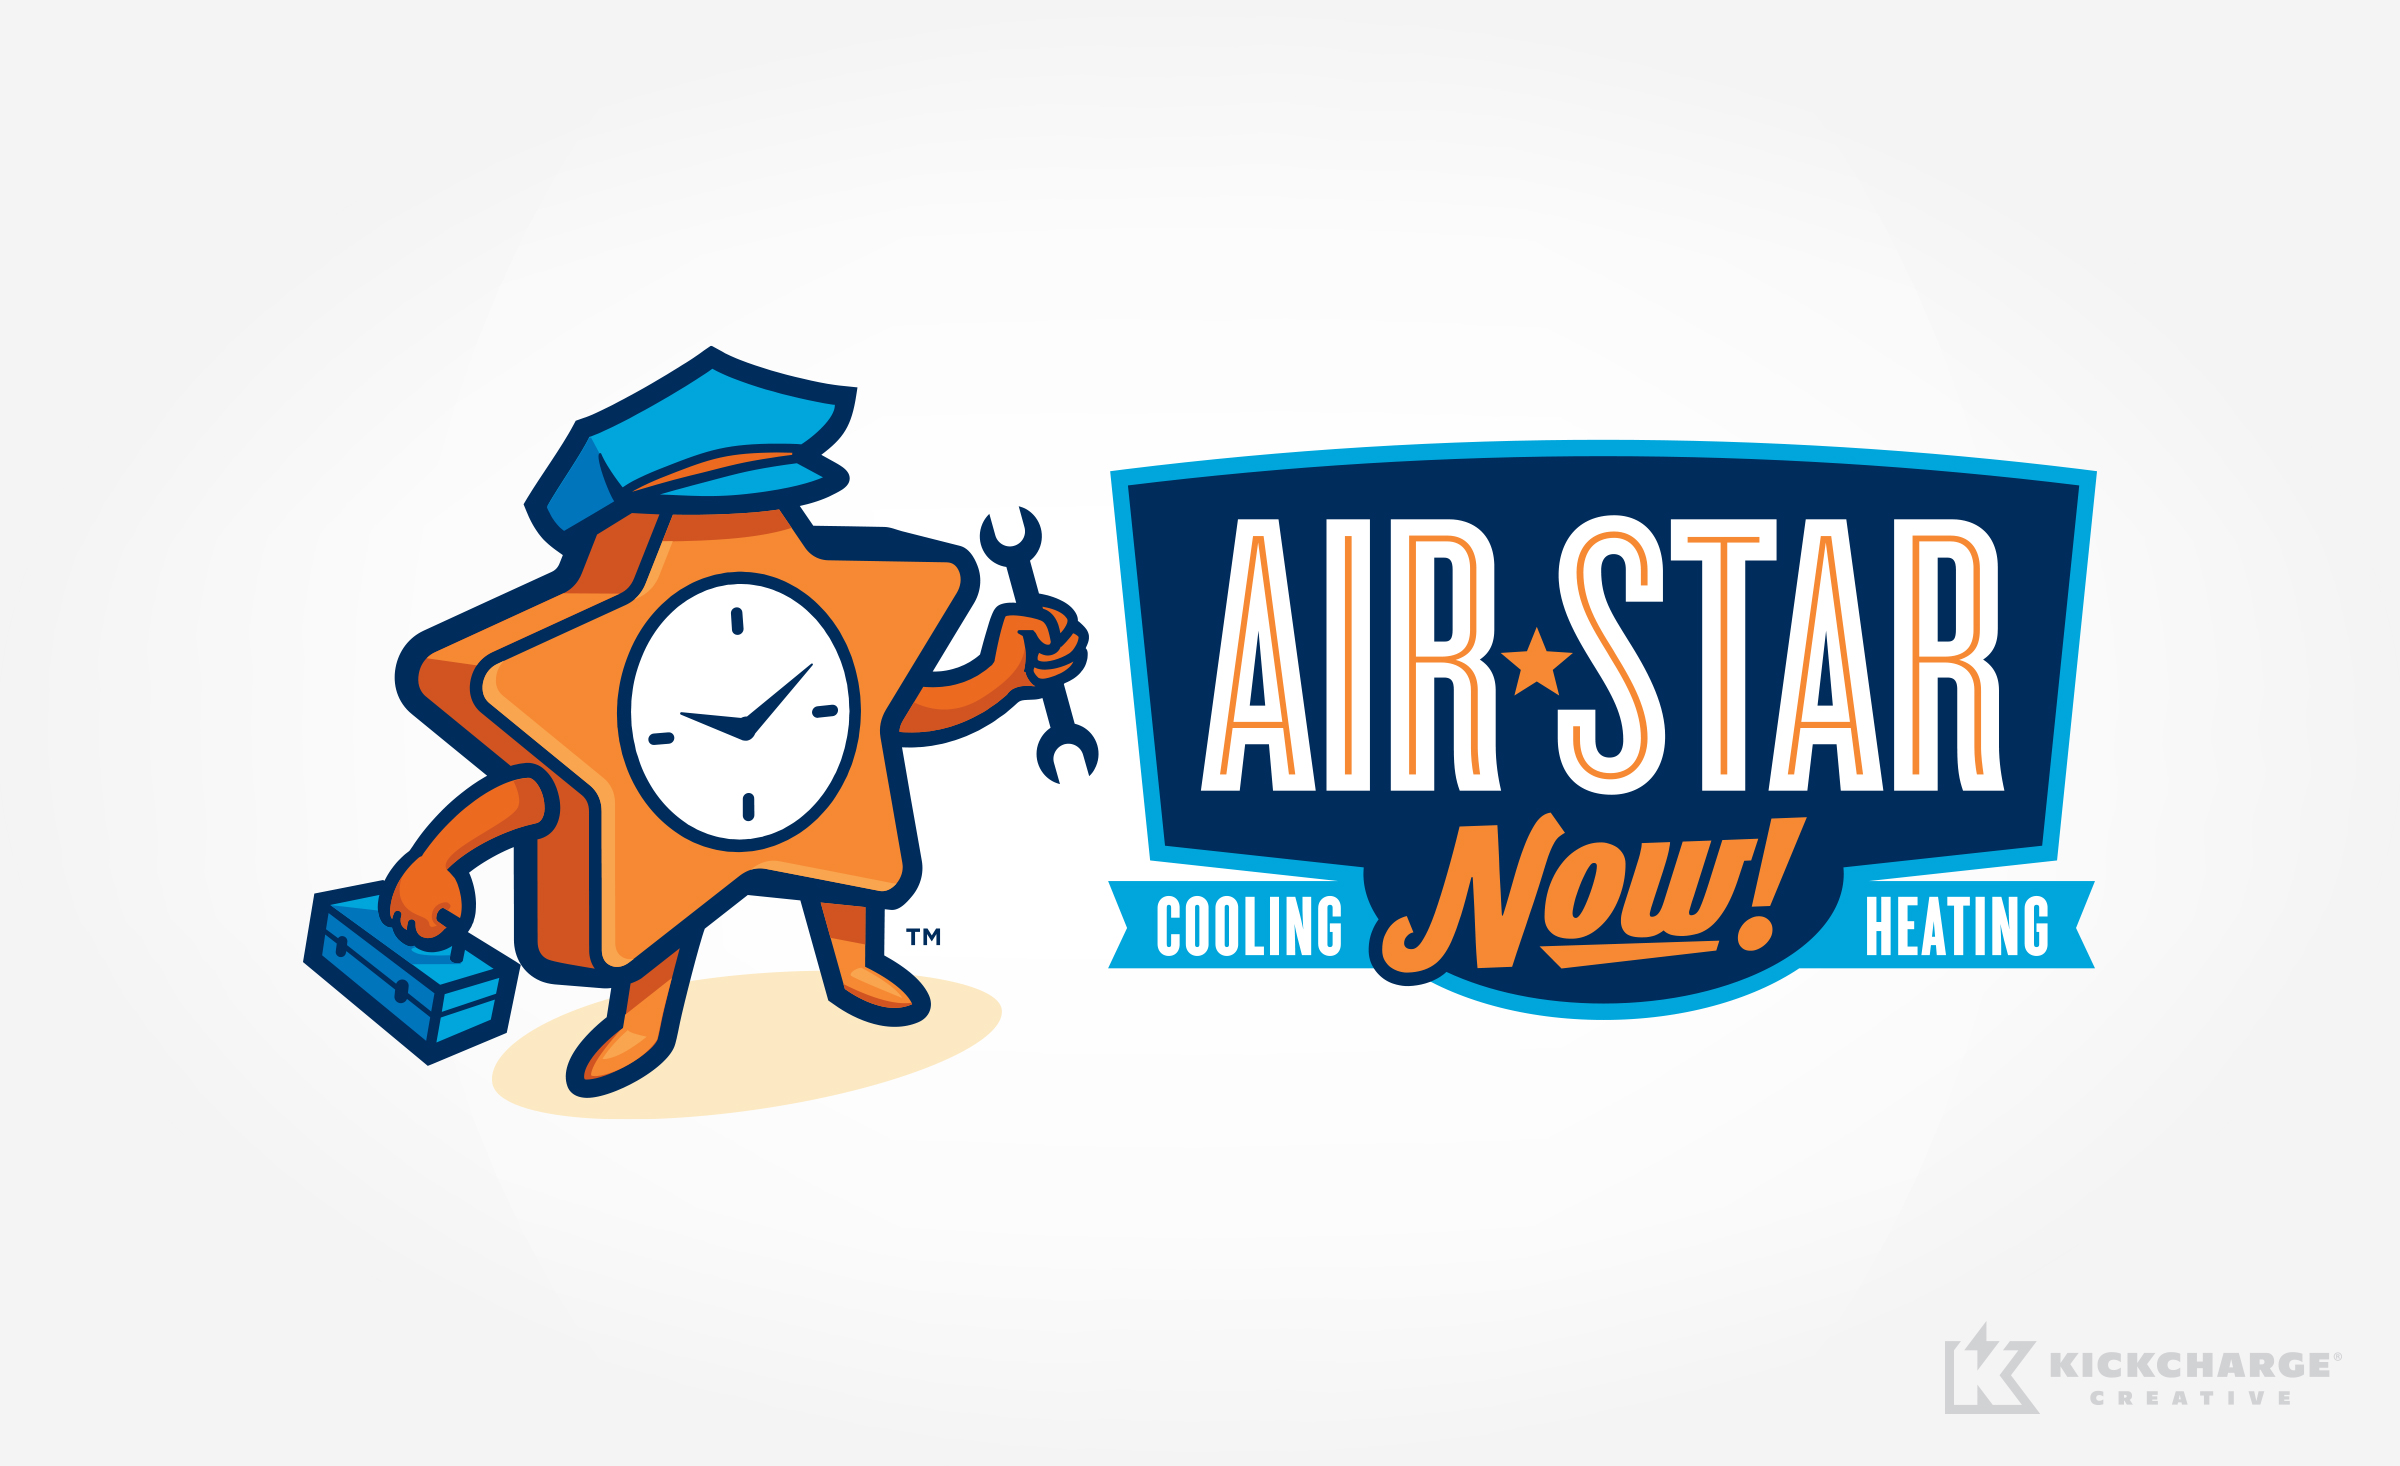 hvac logo for Air Star Now!